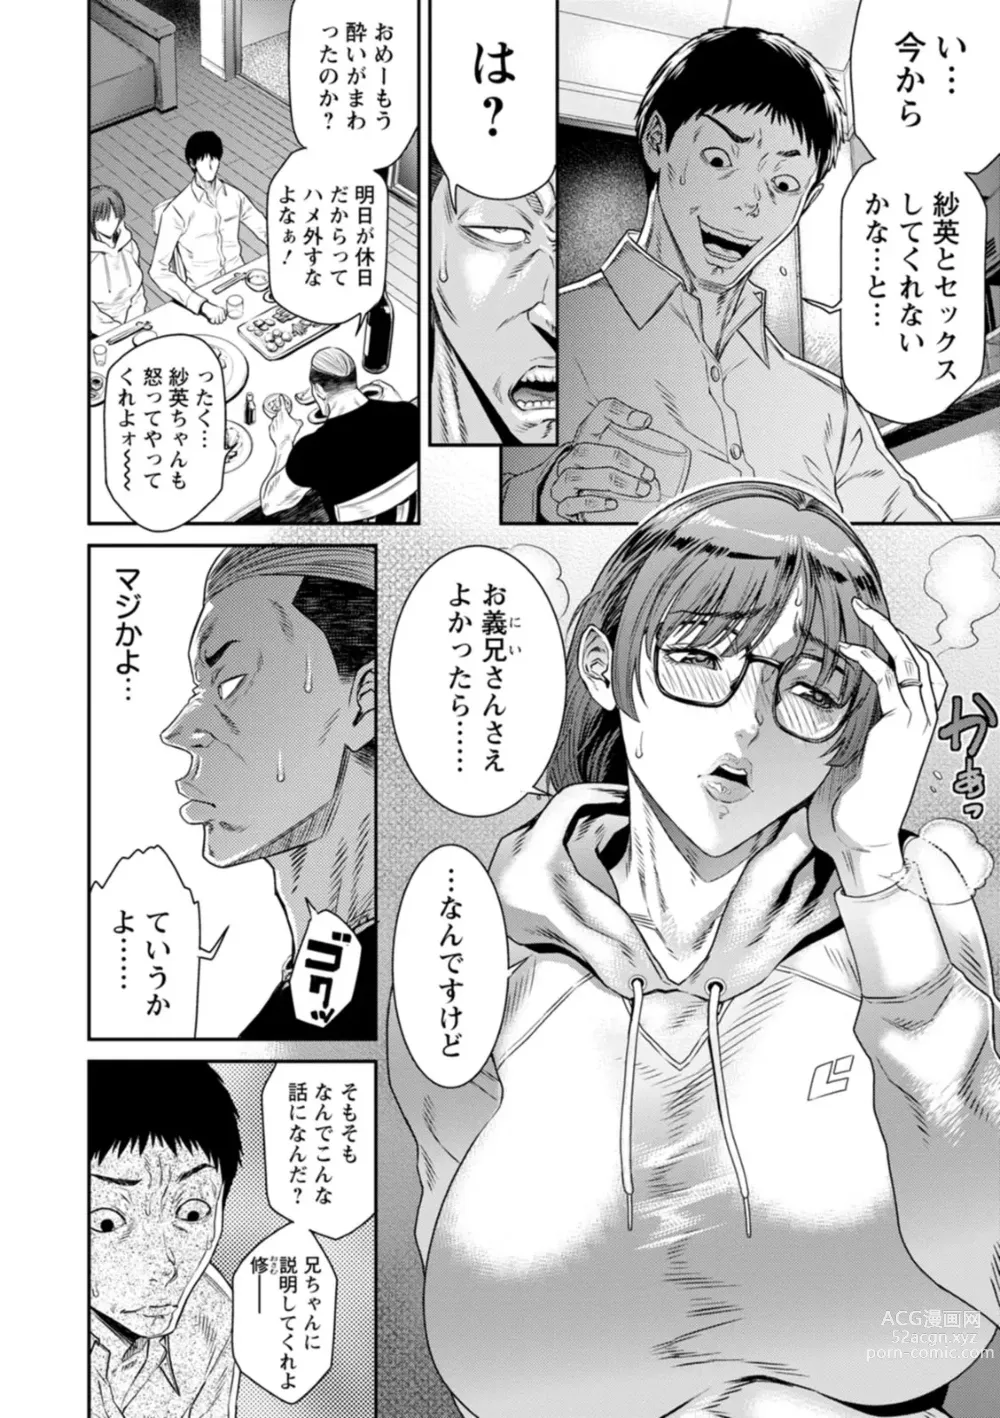 Page 166 of manga Obscene Box